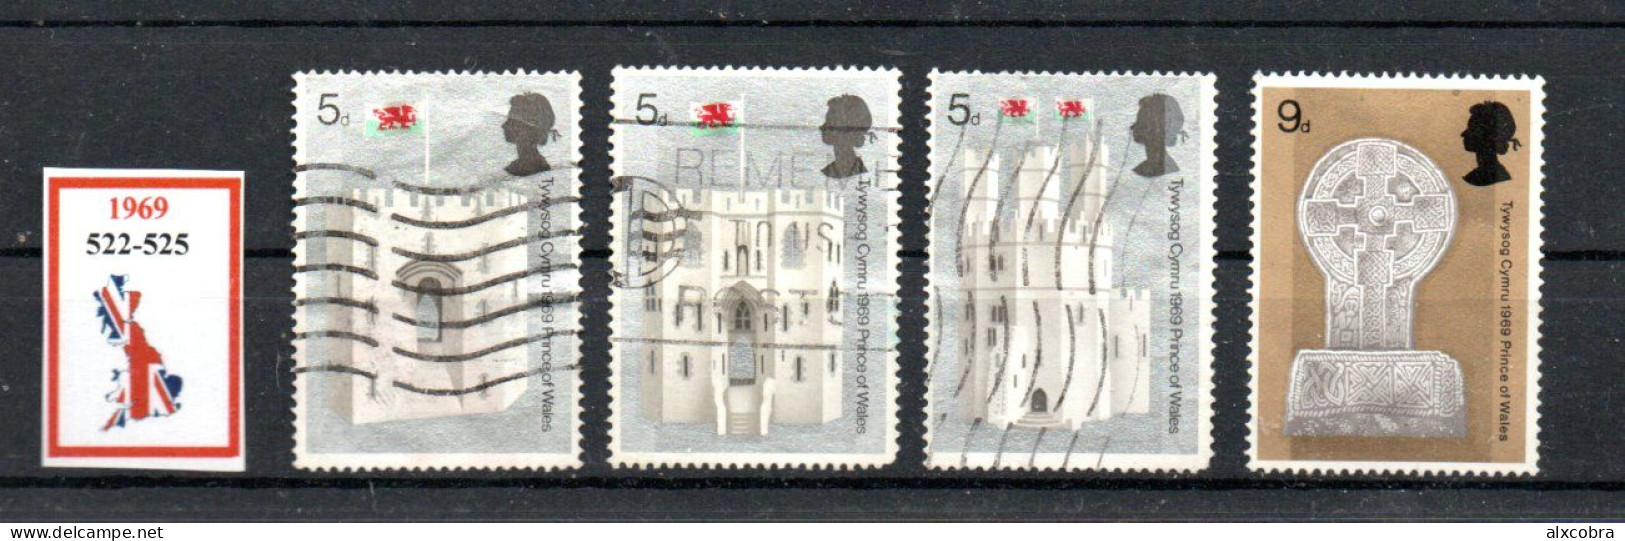 United Kingdom Castles 1969 Michel 522-525 3used 1MNH - Gebraucht